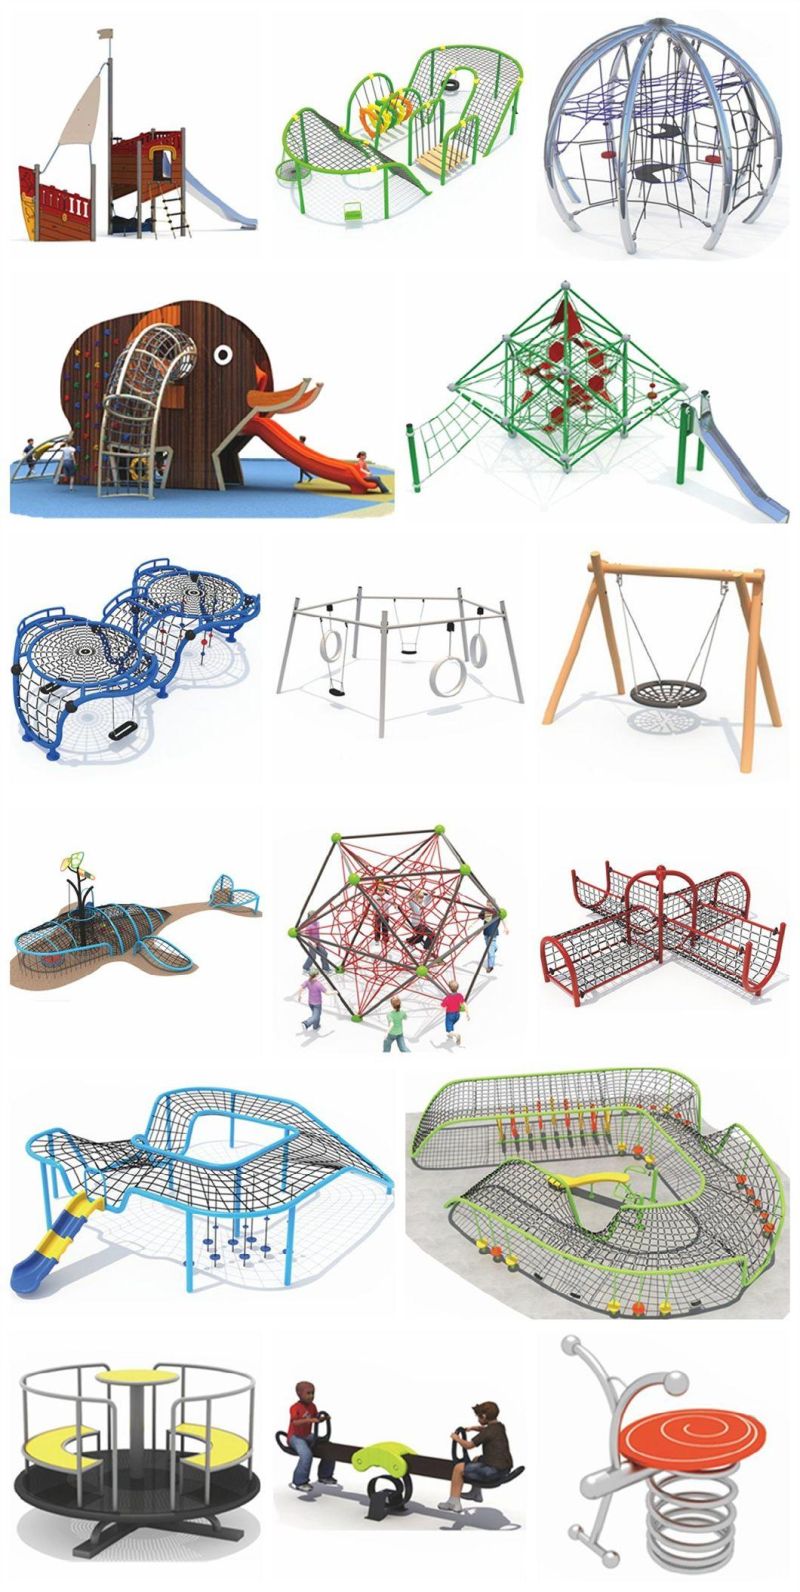 School Park Wooden Slide Climbing Outdoor Kids Playground Equipment Ym62